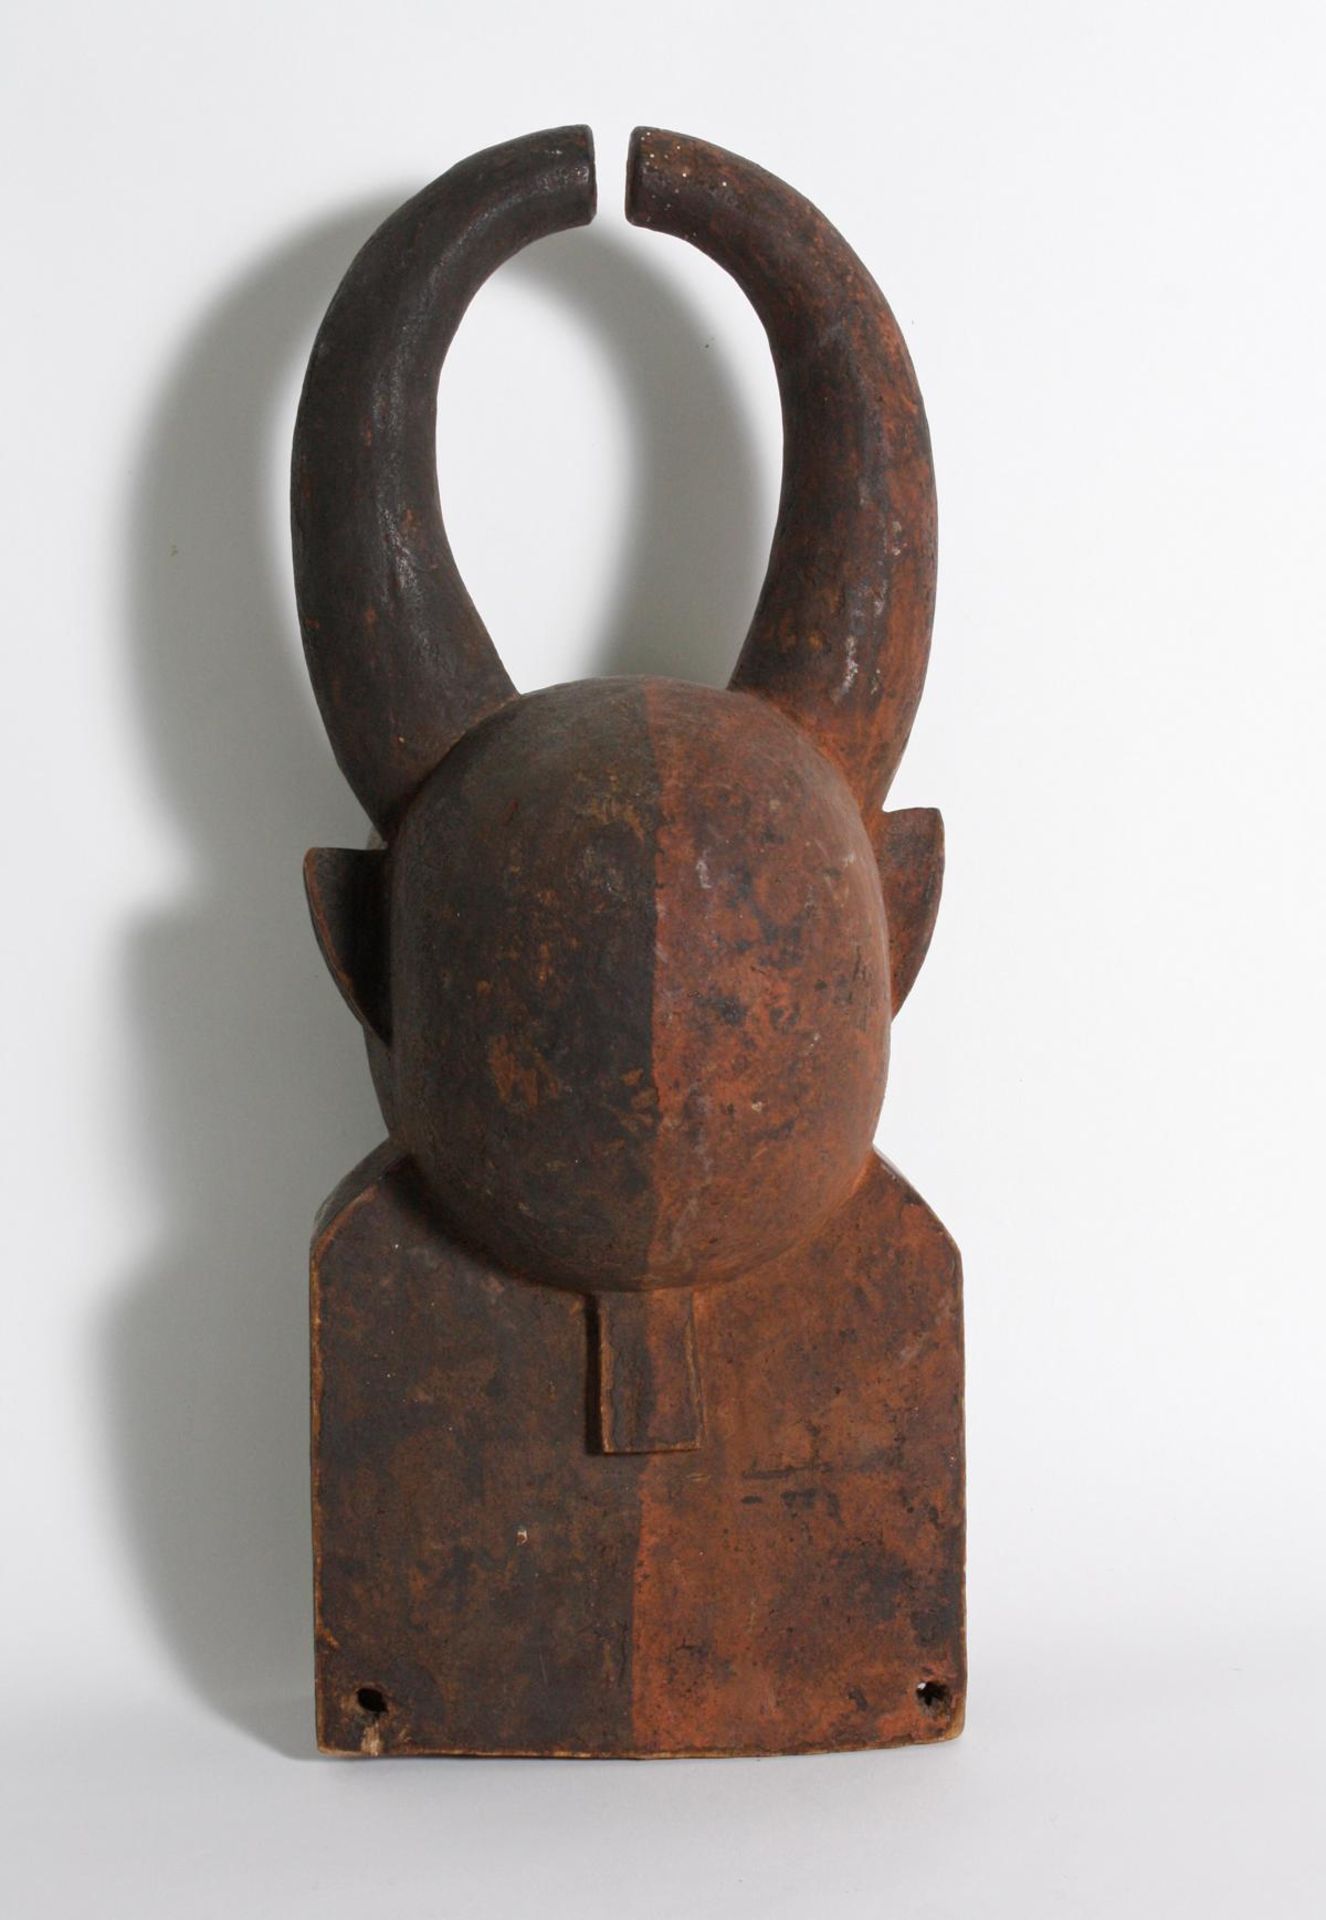 Chamba Büffelmaske, "Nam Gbalang", Nigeria, Kamerun, 1. Hälfte 20. Jh.Holz, geschnitzt, Helmmaske,